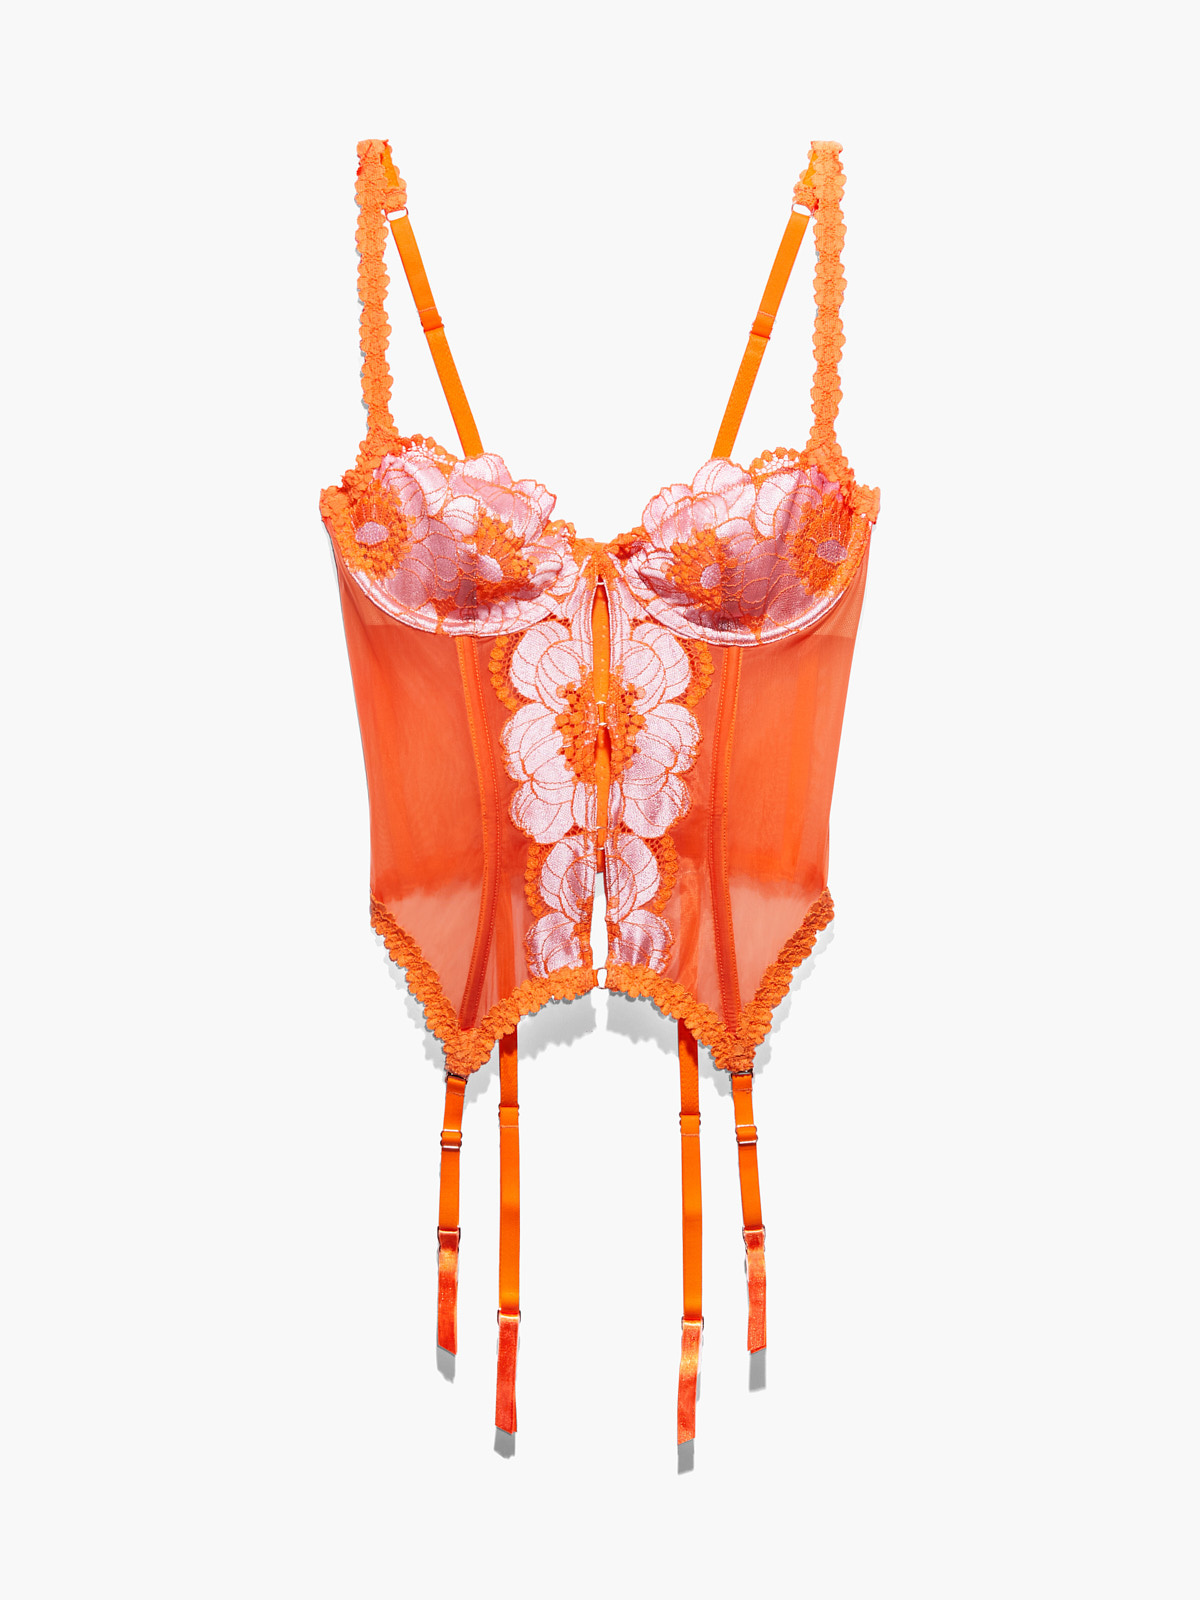 SAVAGE X FENTY Mod Poppy Bra & Panty Set 40D 1X Orange 🍊 Floral Lace